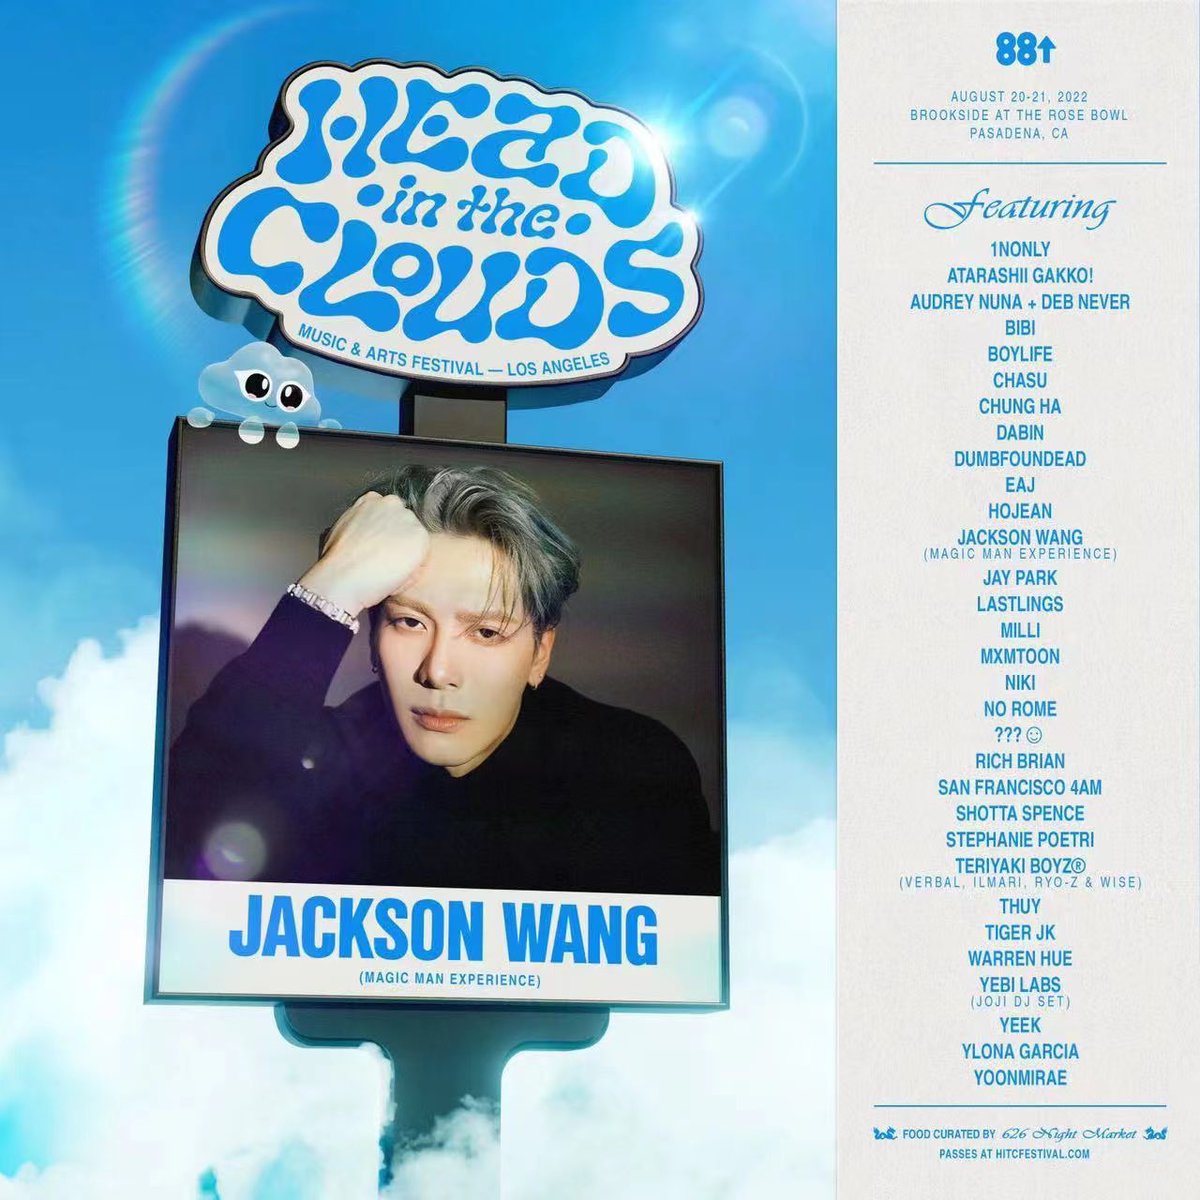 How to Get Tickets to Jackson Wang's MAGIC MAN Tour